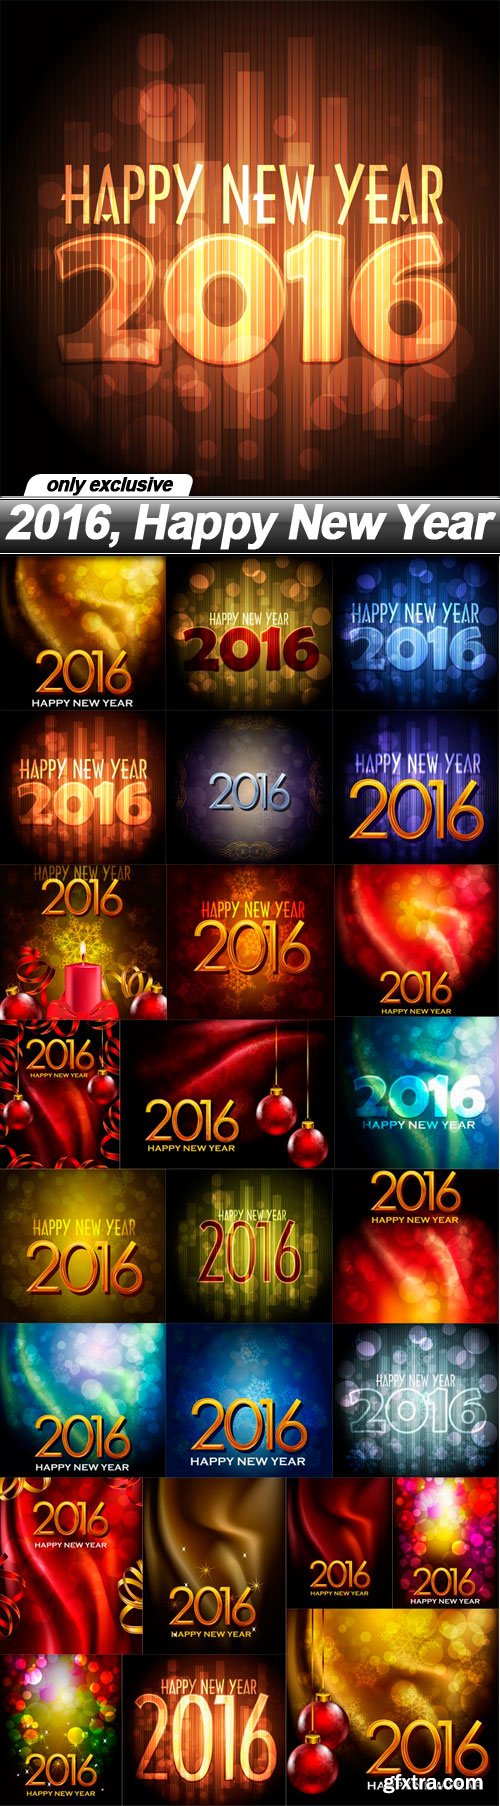 2016, Happy New Year - 25 EPS